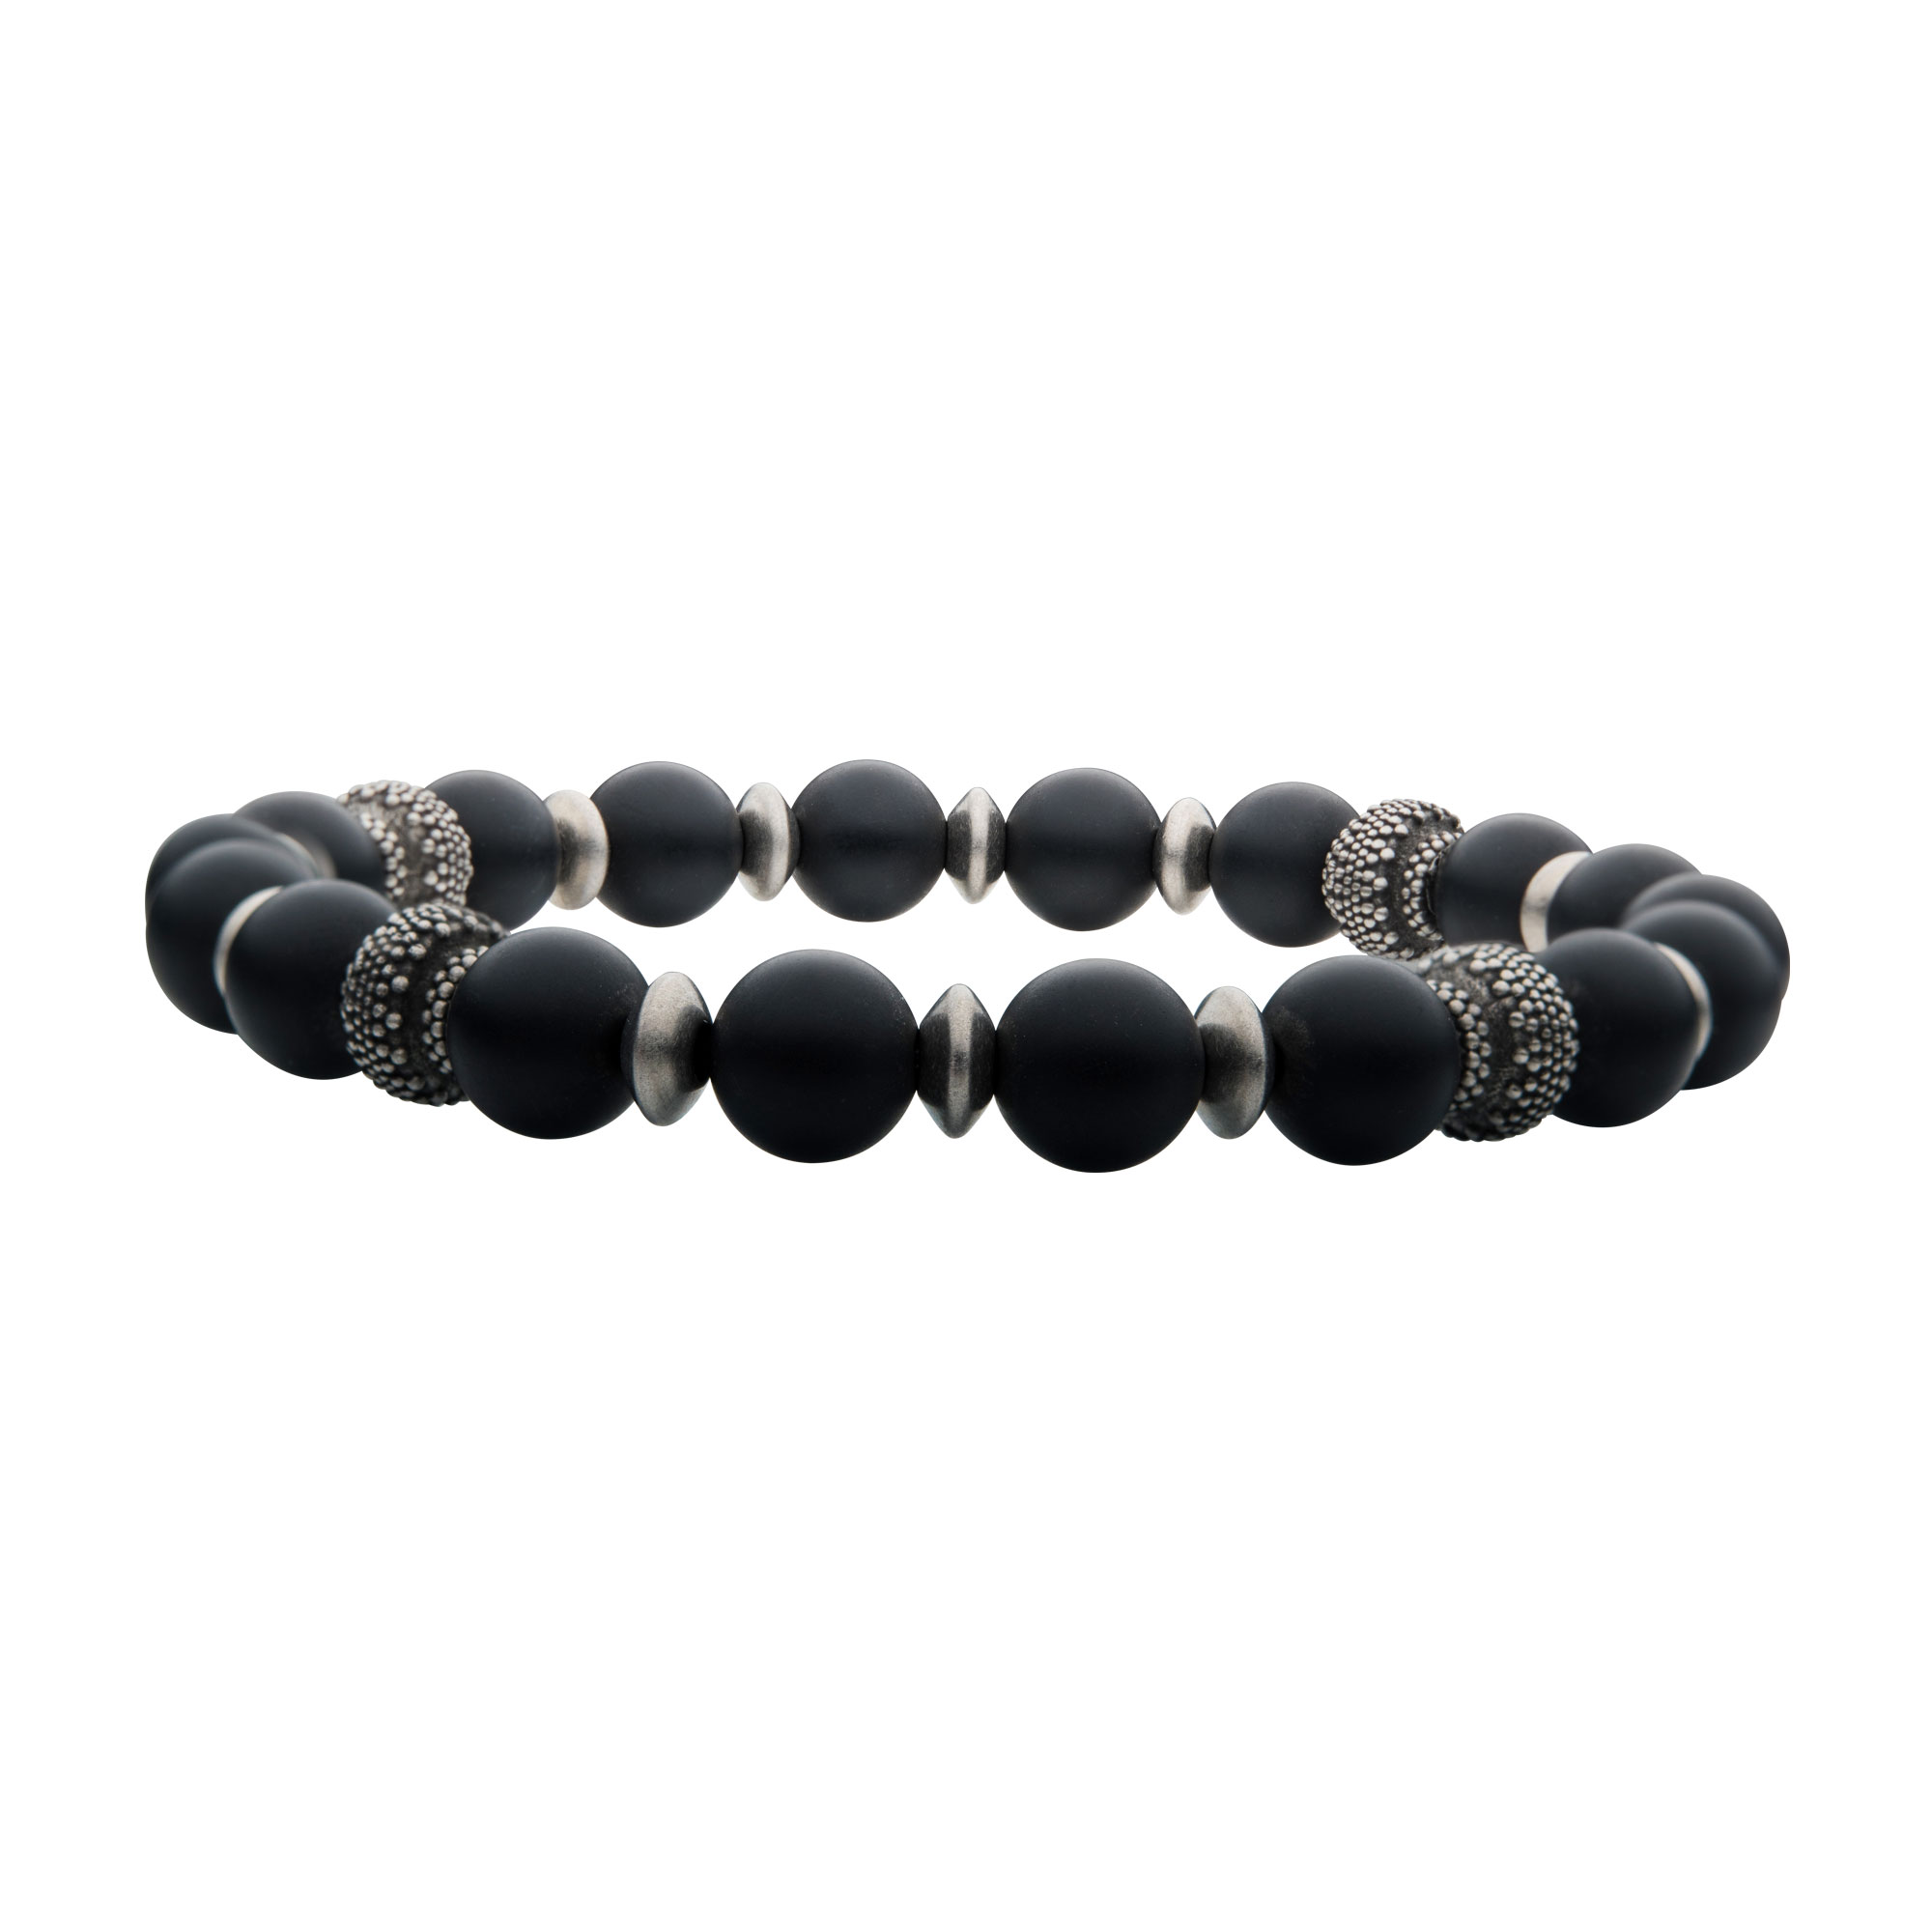 Matte Black Agate Stones with Black Oxidized Beads Bracelet P.K. Bennett Jewelers Mundelein, IL